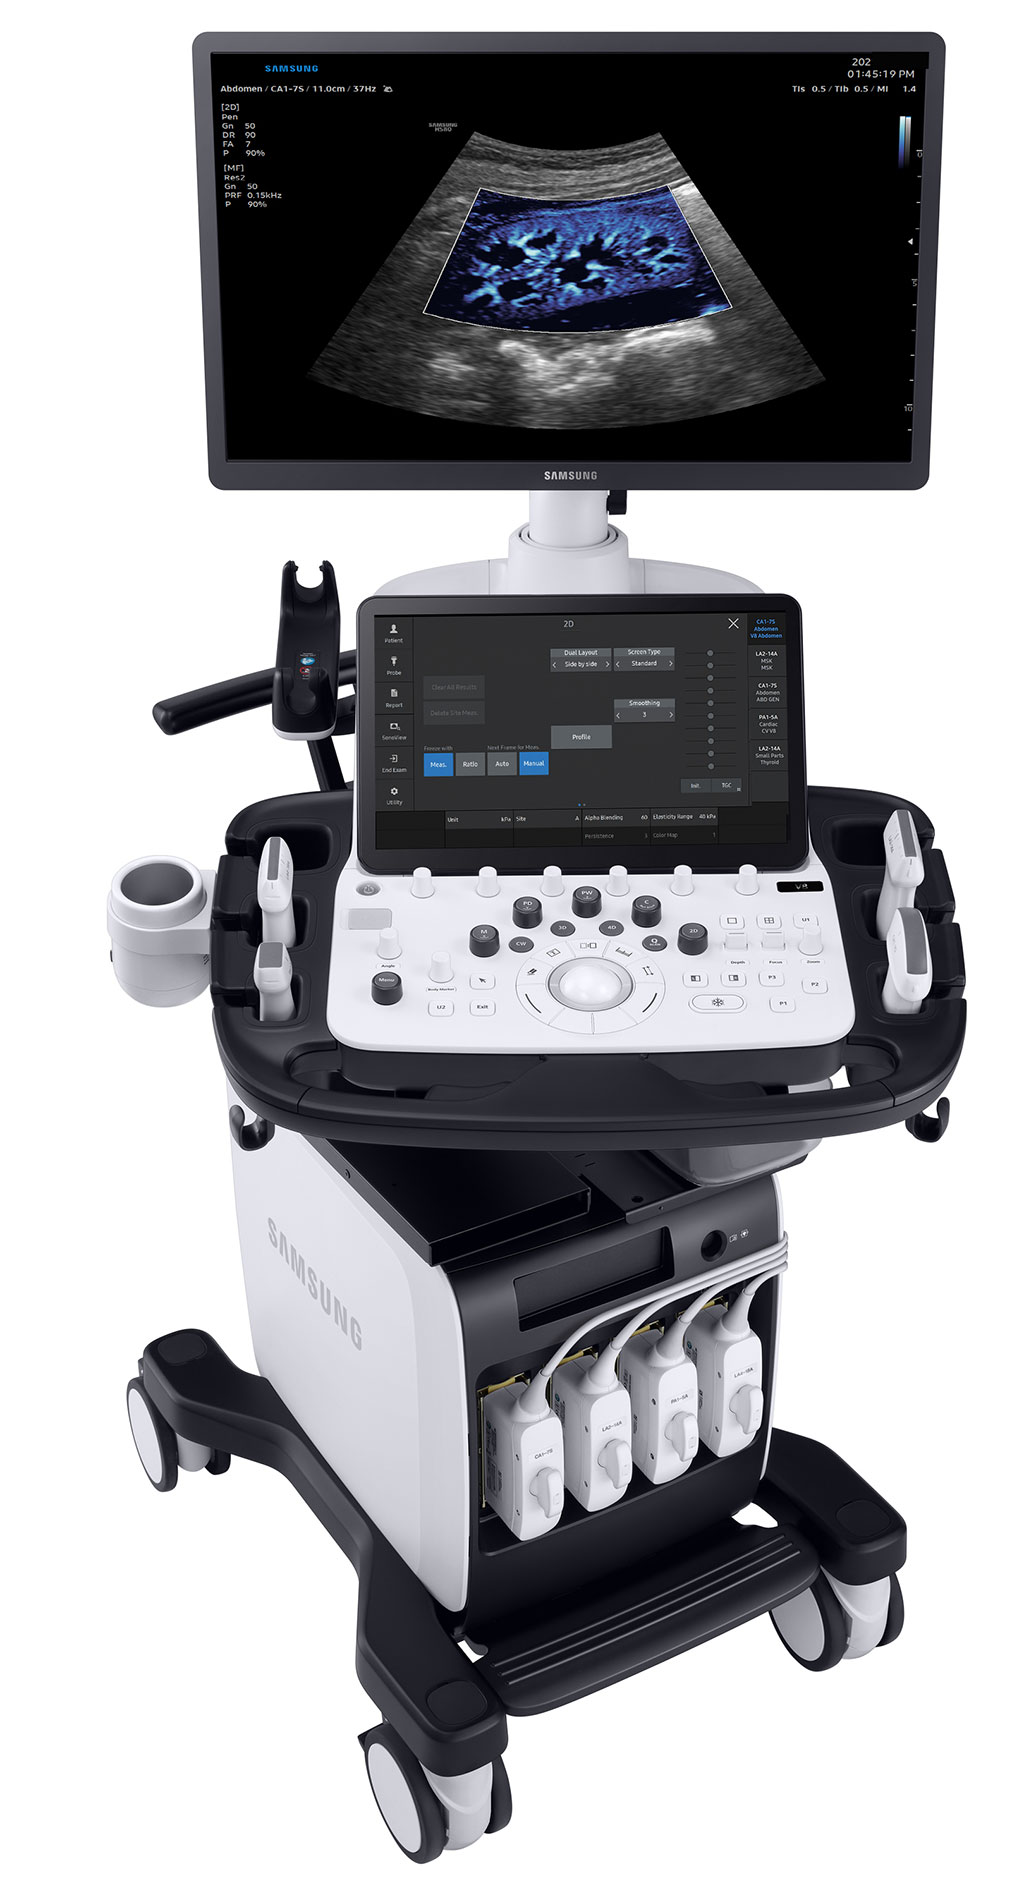 Image: V8 high-end ultrasound system (Photo courtesy of Samsung Electronics Co., Ltd.)